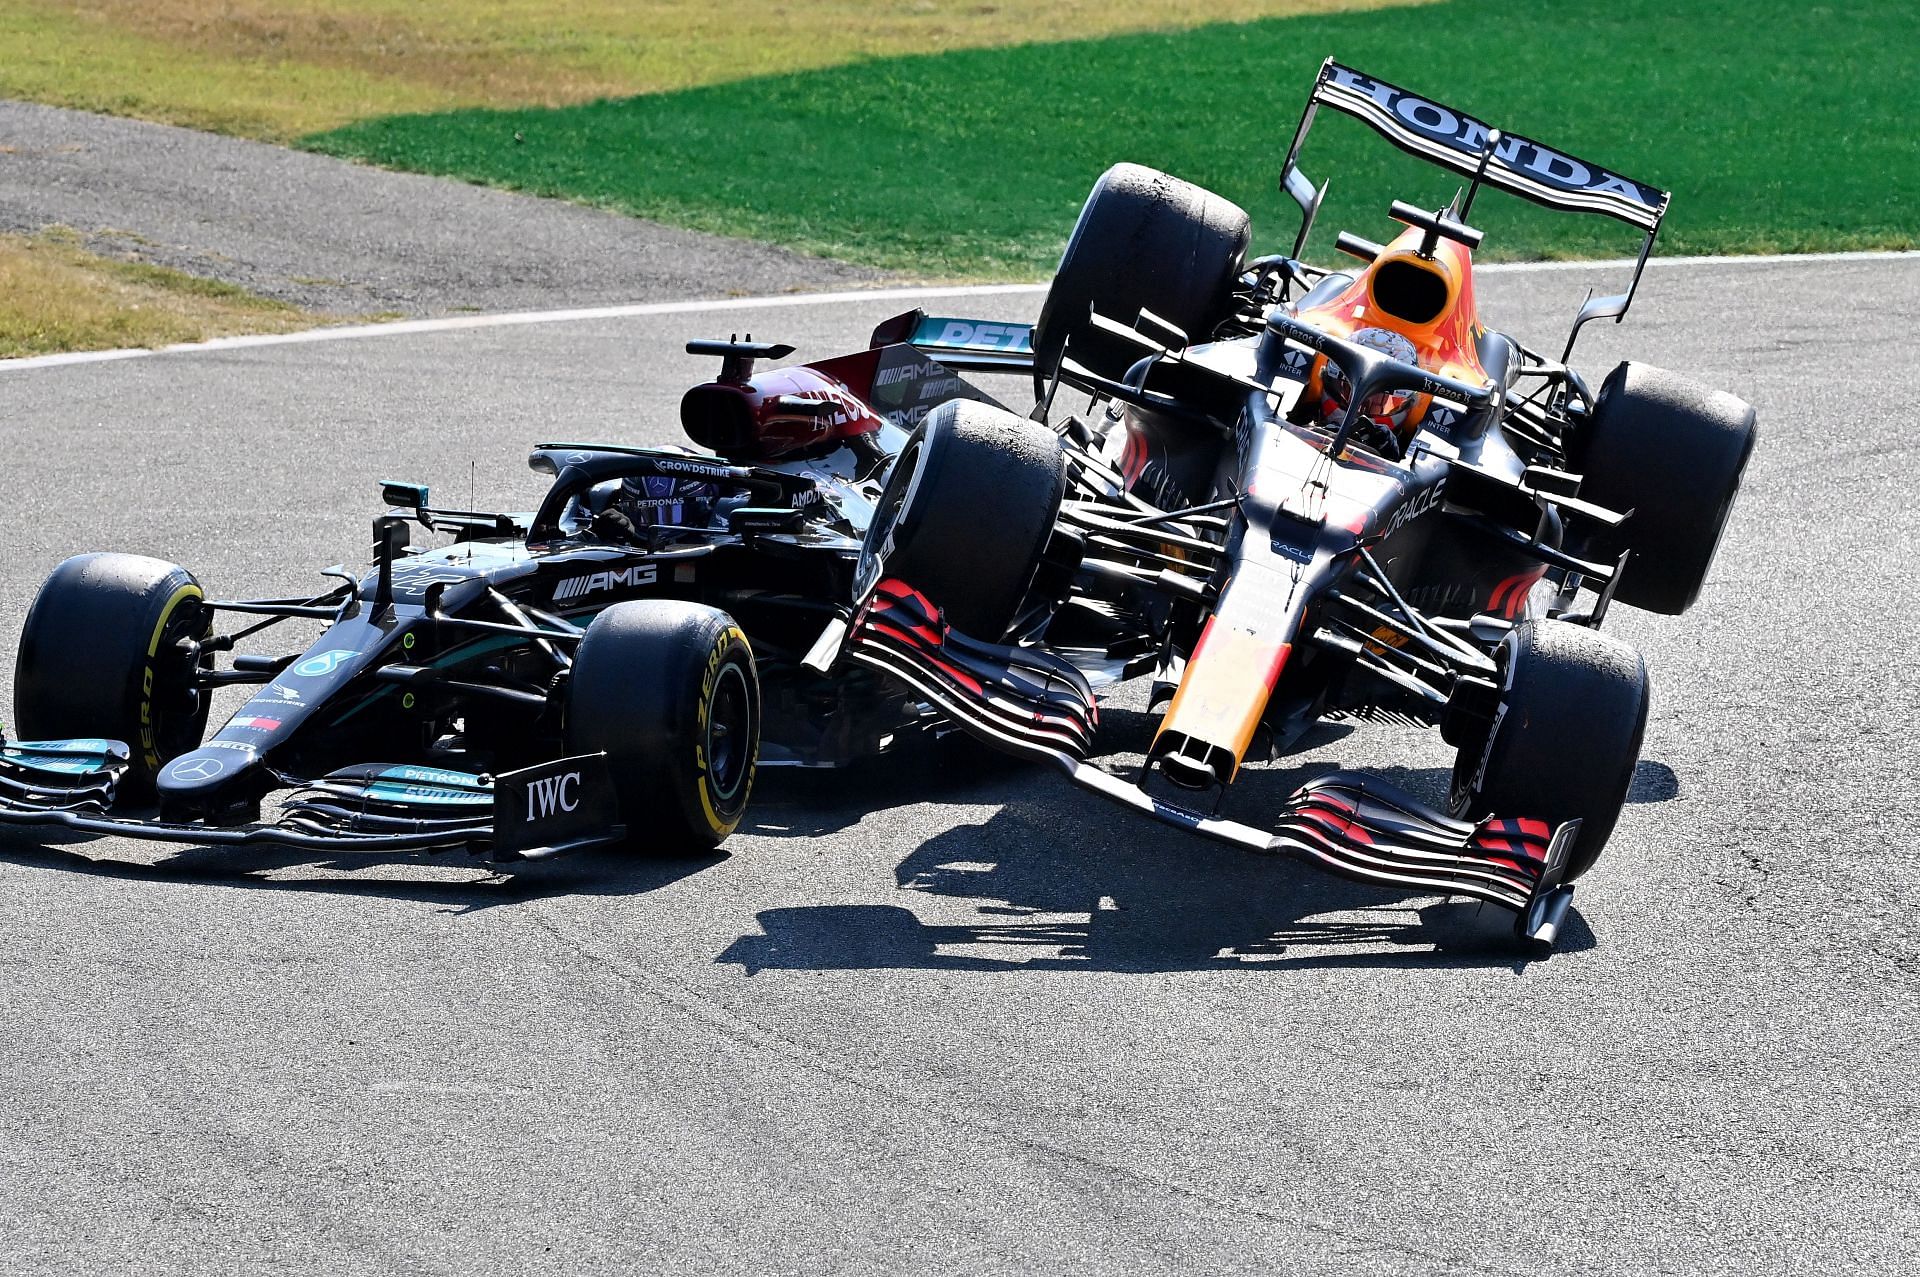 F1 Grand Prix of Italy - Max Verstappen and Lewis Hamilton crash at Monza.